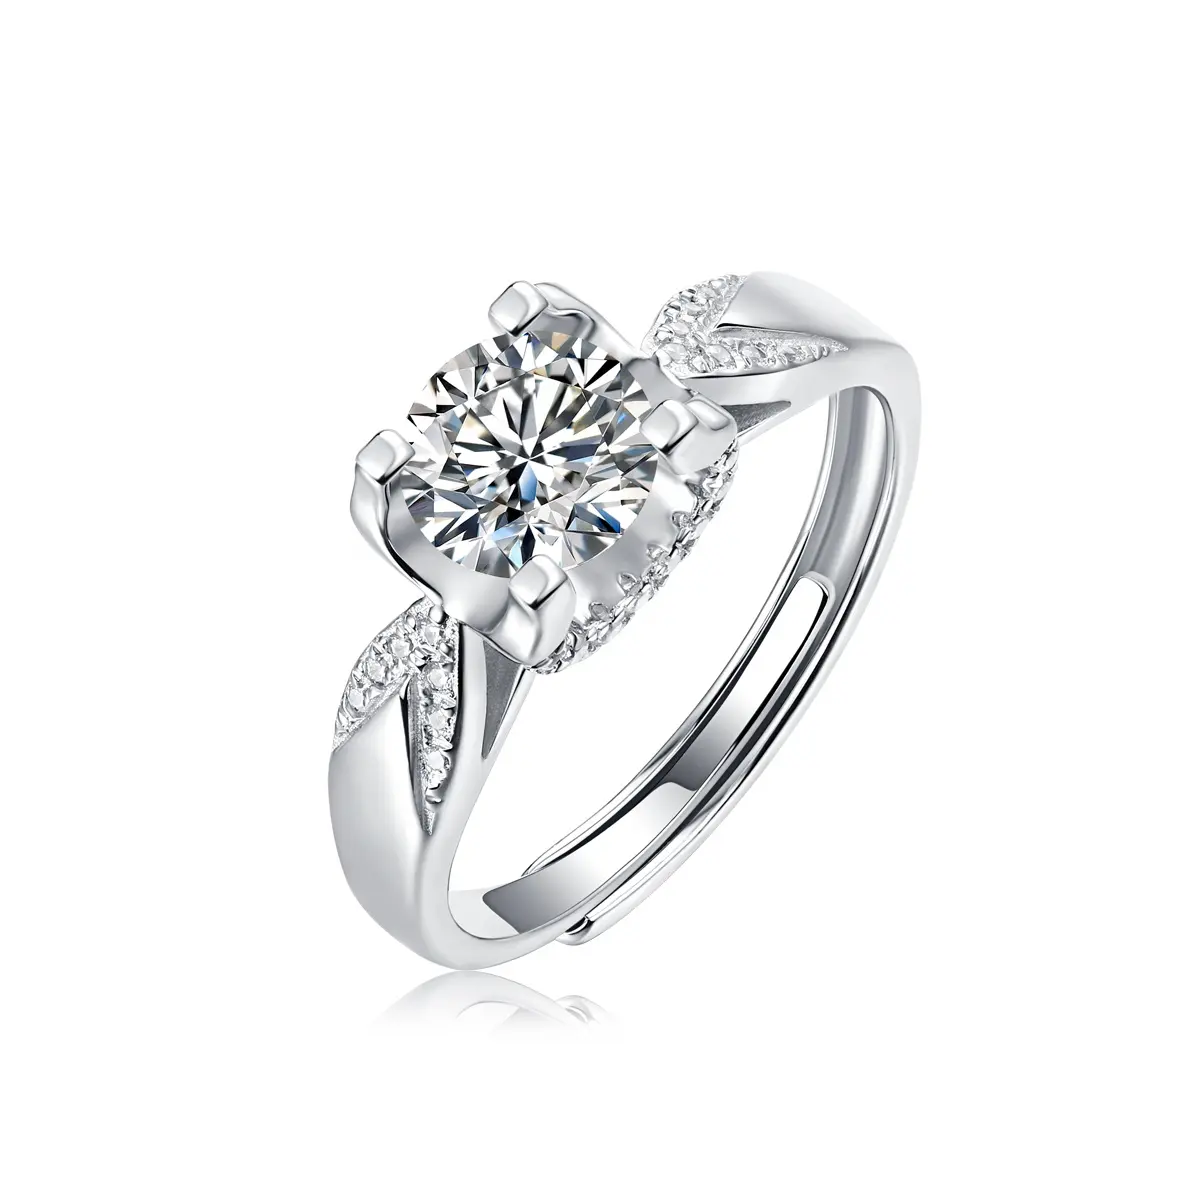 Escena delicada mujer 925 anillo de plata esterlina 3A + Zirconia cúbica boda diamante anillo de joyería ajustable